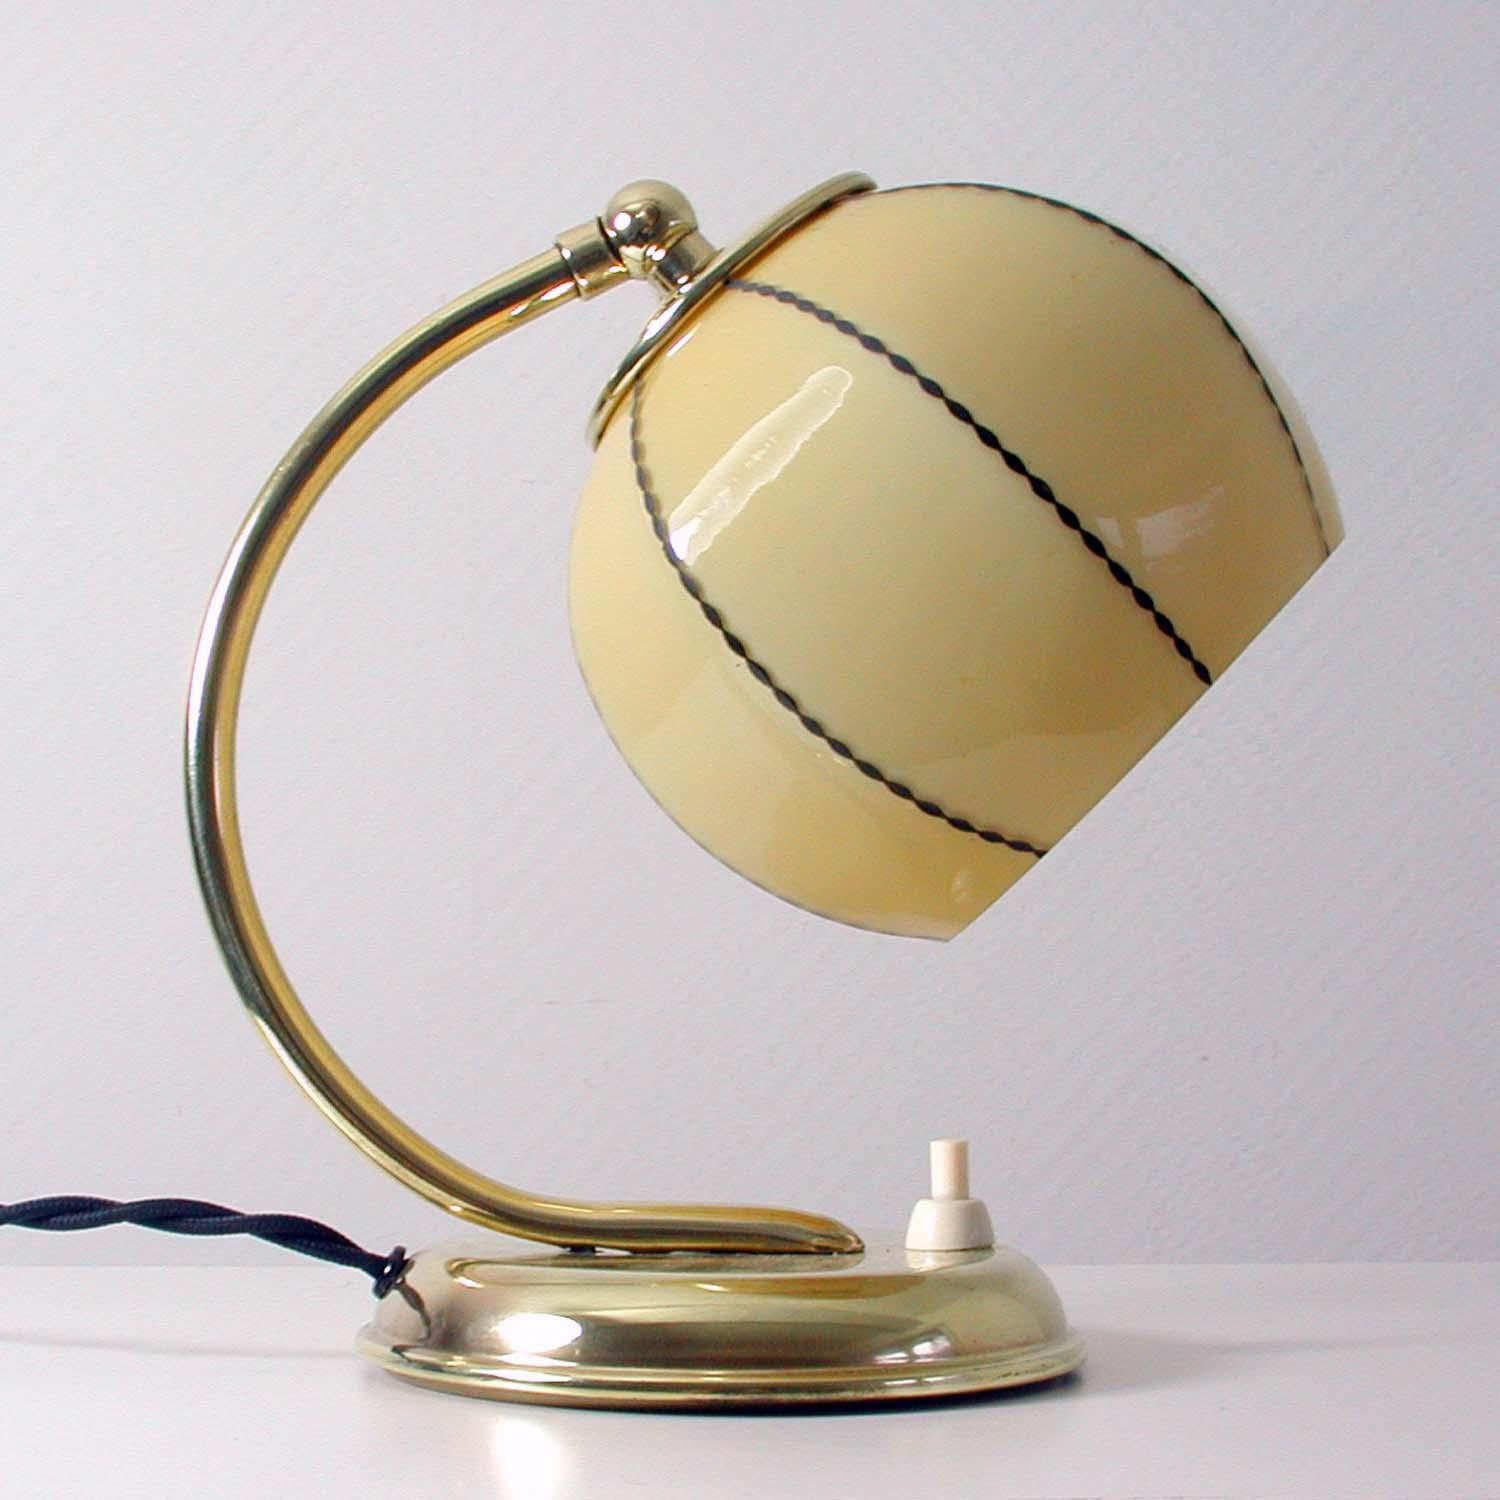 Vintage 1930s German Bauhaus Art Deco Brass and Opal Table Lamp Sconce (Deutsch)